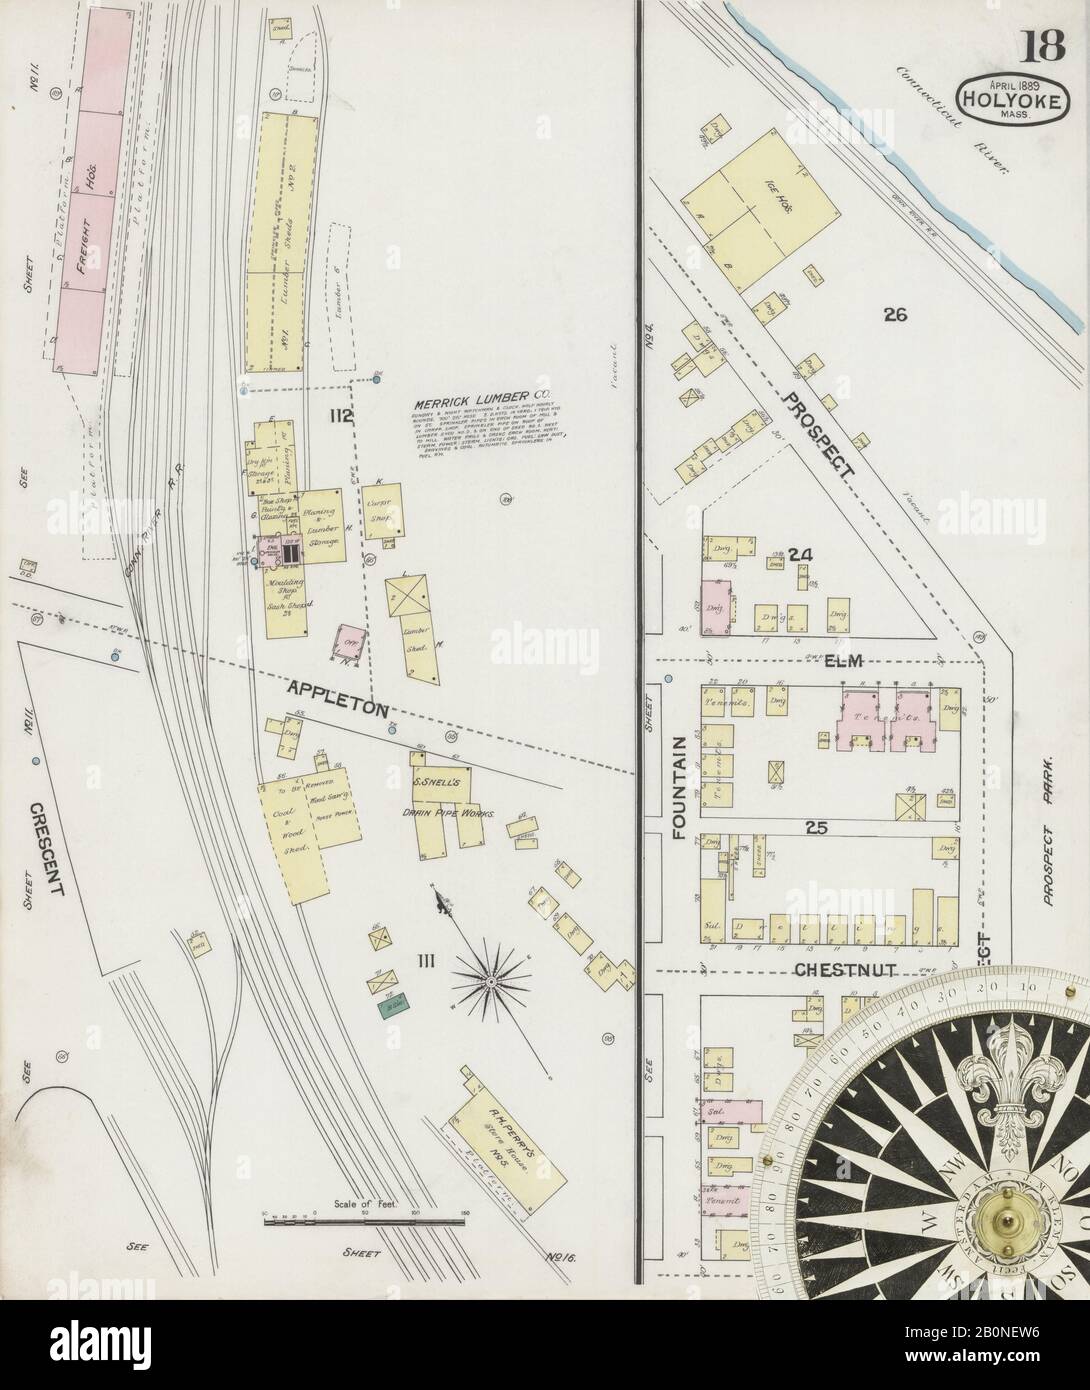 Bild 18 von Sanborn Fire Insurance Map aus Holyoke, Hampden County, Massachusetts. Apr. 30 Blatt(e), Amerika, Straßenkarte mit einem Kompass Aus Dem 19. Jahrhundert Stockfoto